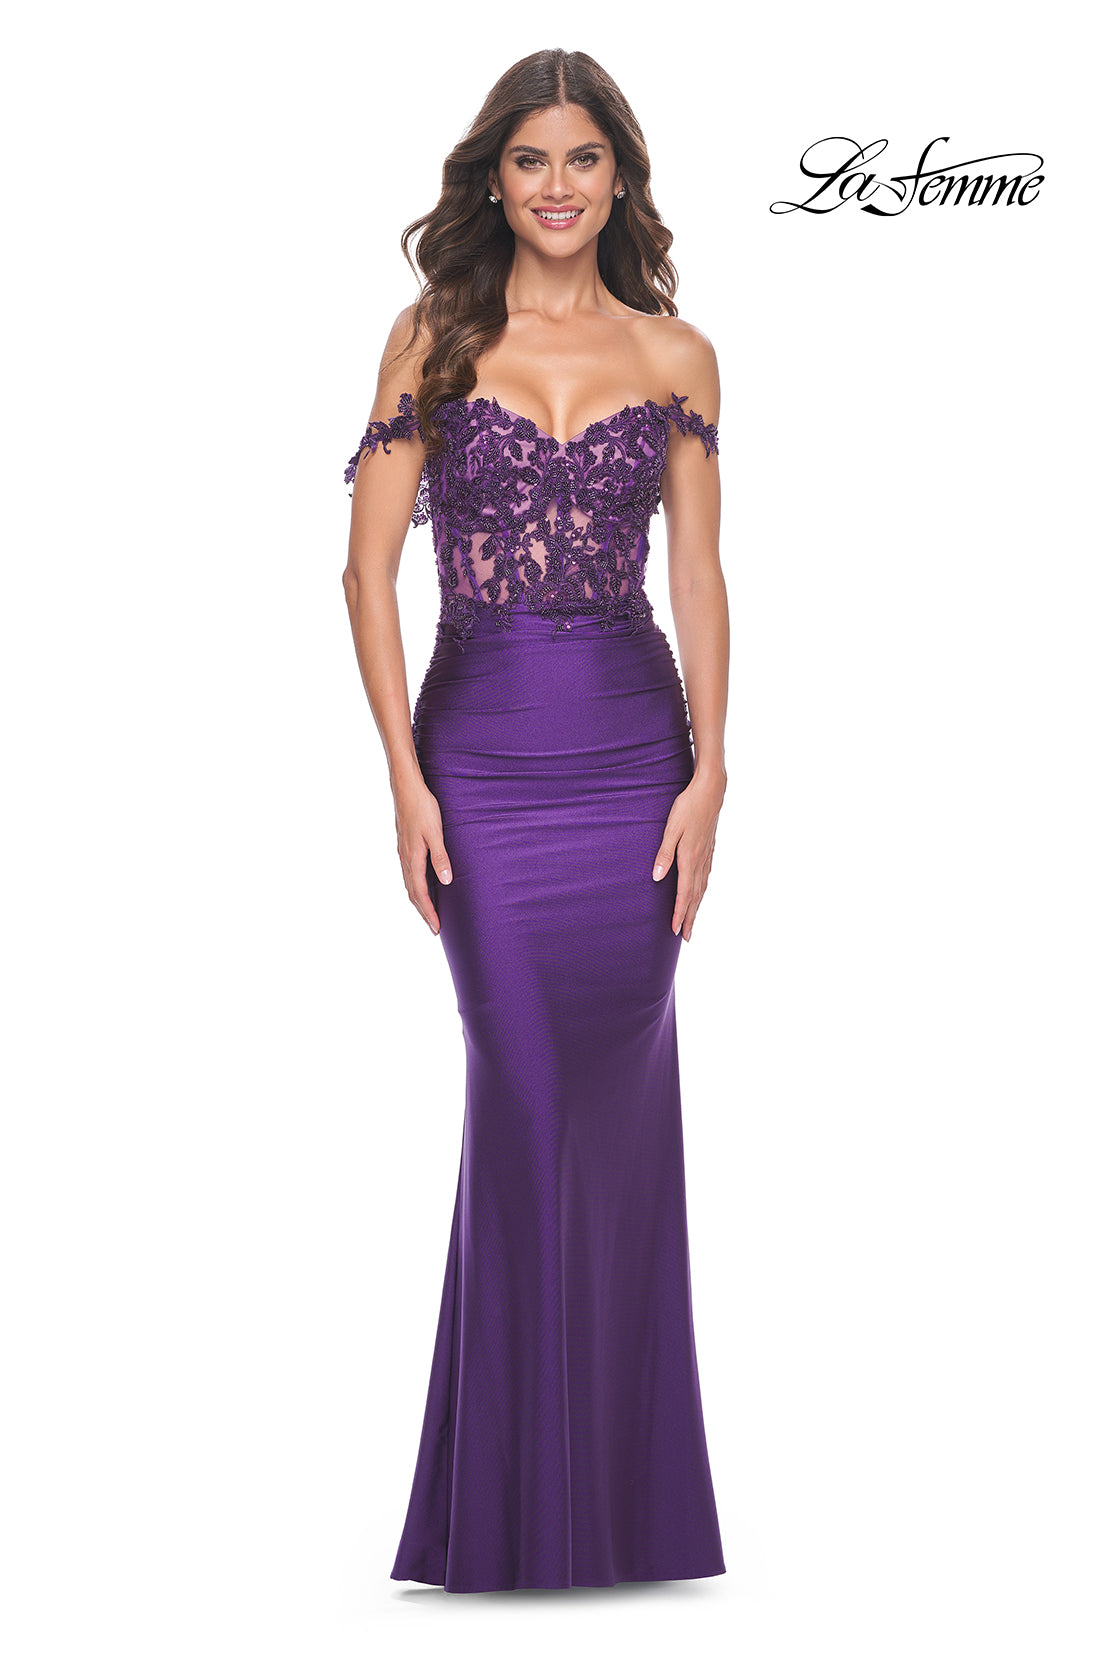 La-Femme-32302-Sweetheart-Neckline-Zipper-Back-Corset-Lace-Jersey-Fitted-Royal-Purple-Evening-Dress-B-Chic-Fashions-Prom-Dress